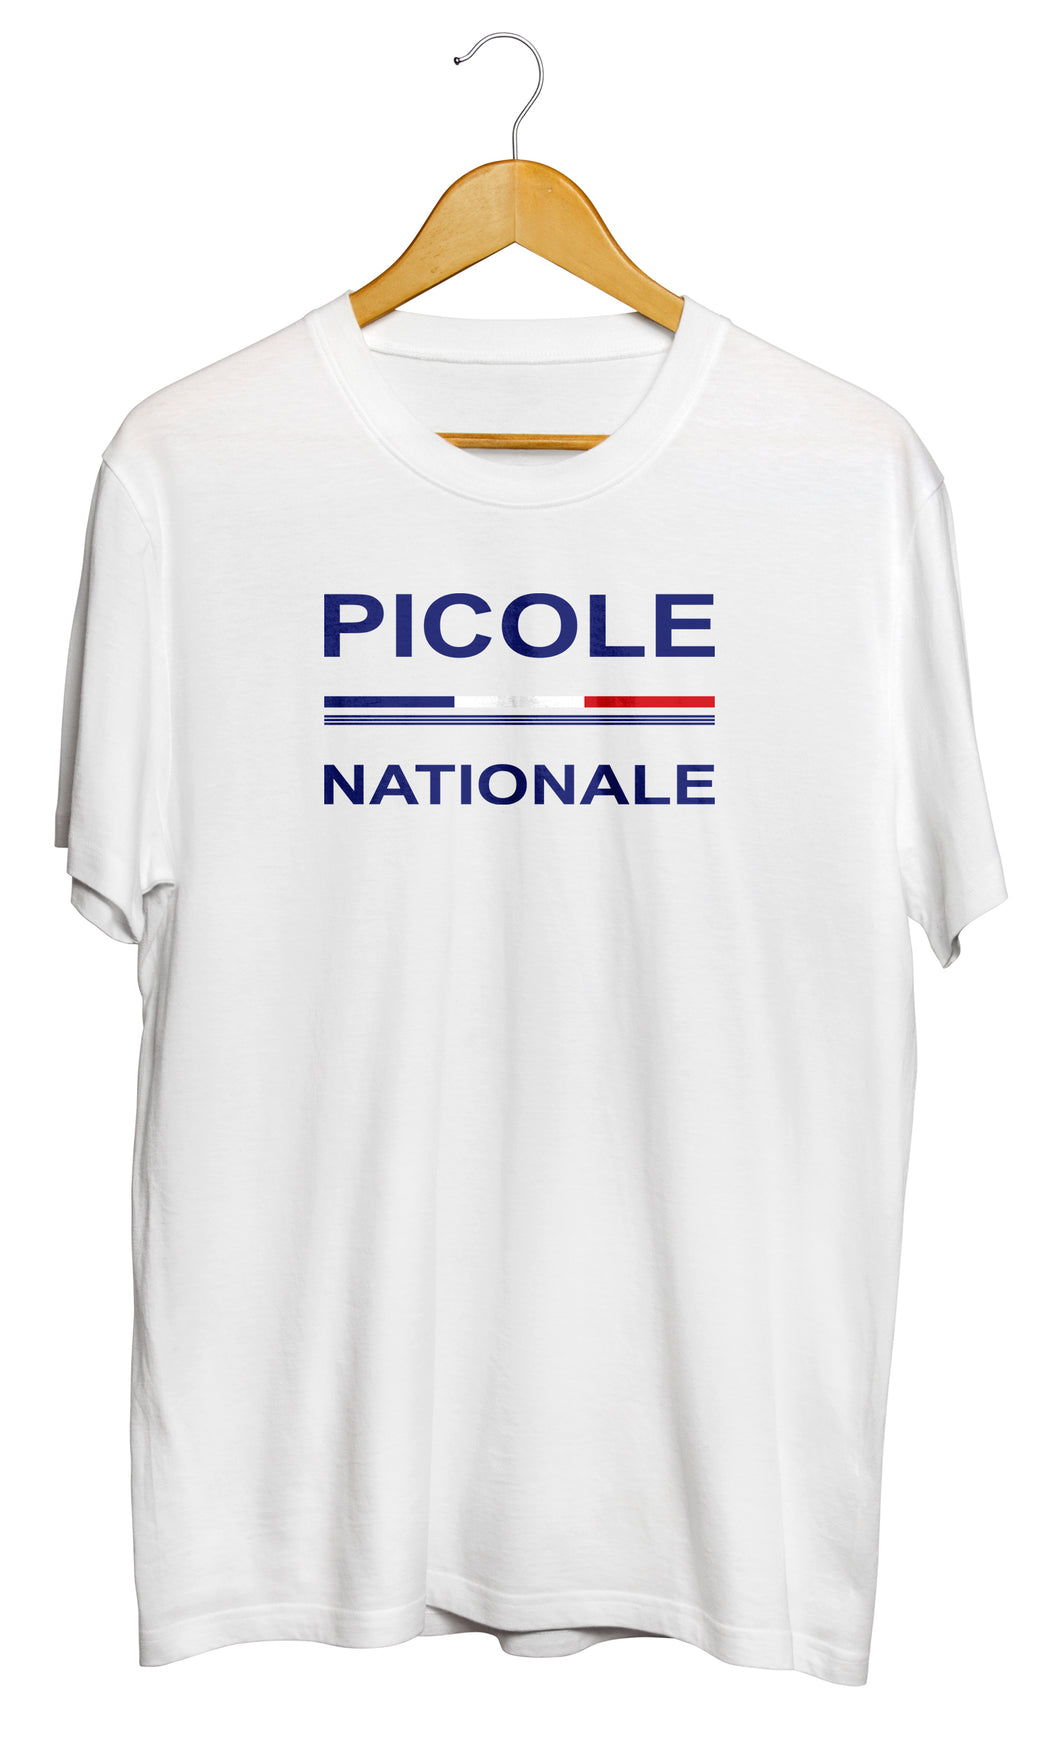 T-shirt original Picole nationale boisson alcool cocktail So Custom